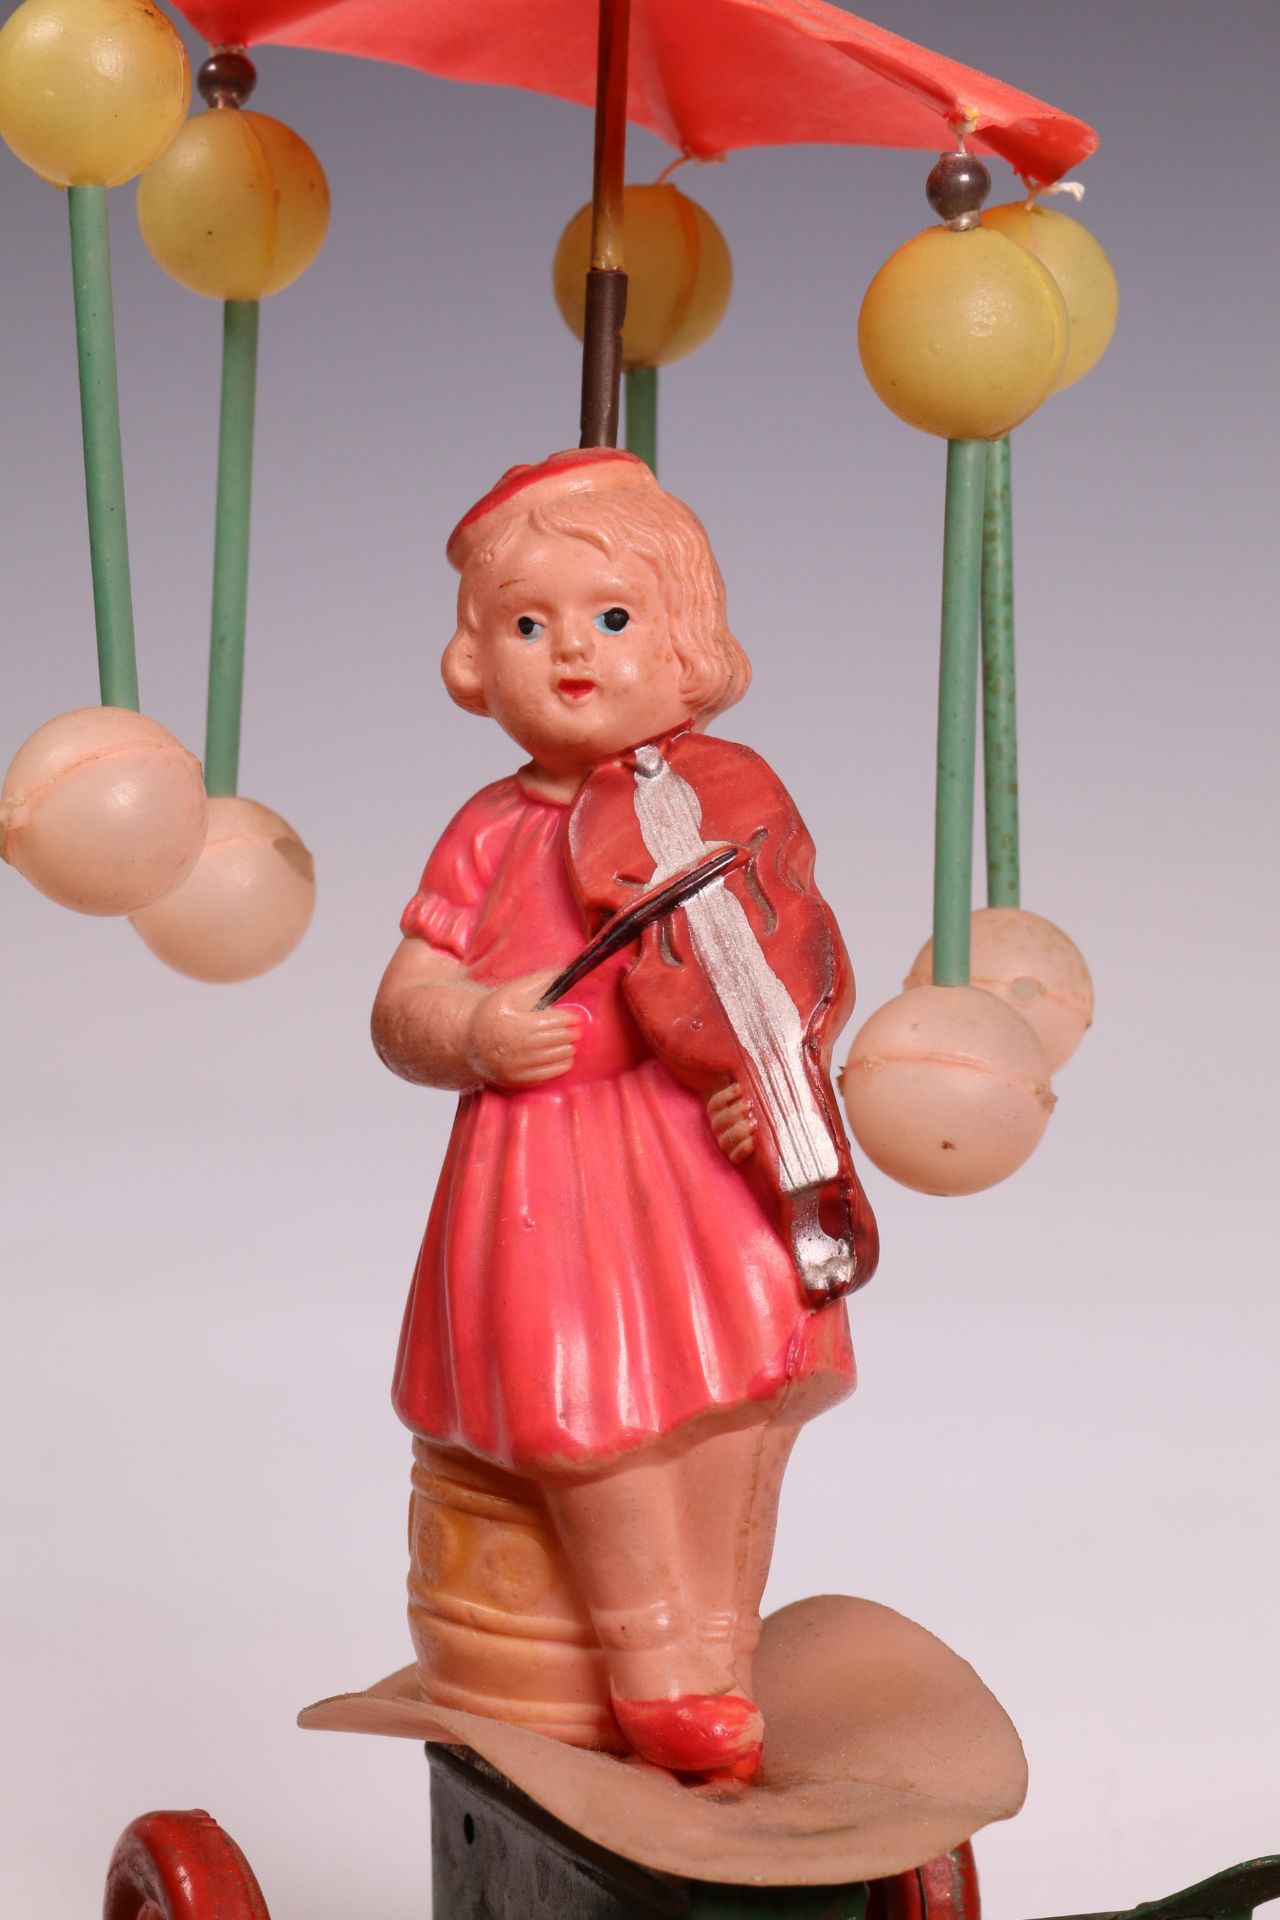 Japan, vier stuks celluloid speelgoed, ca. 1940-1950. - Image 6 of 19